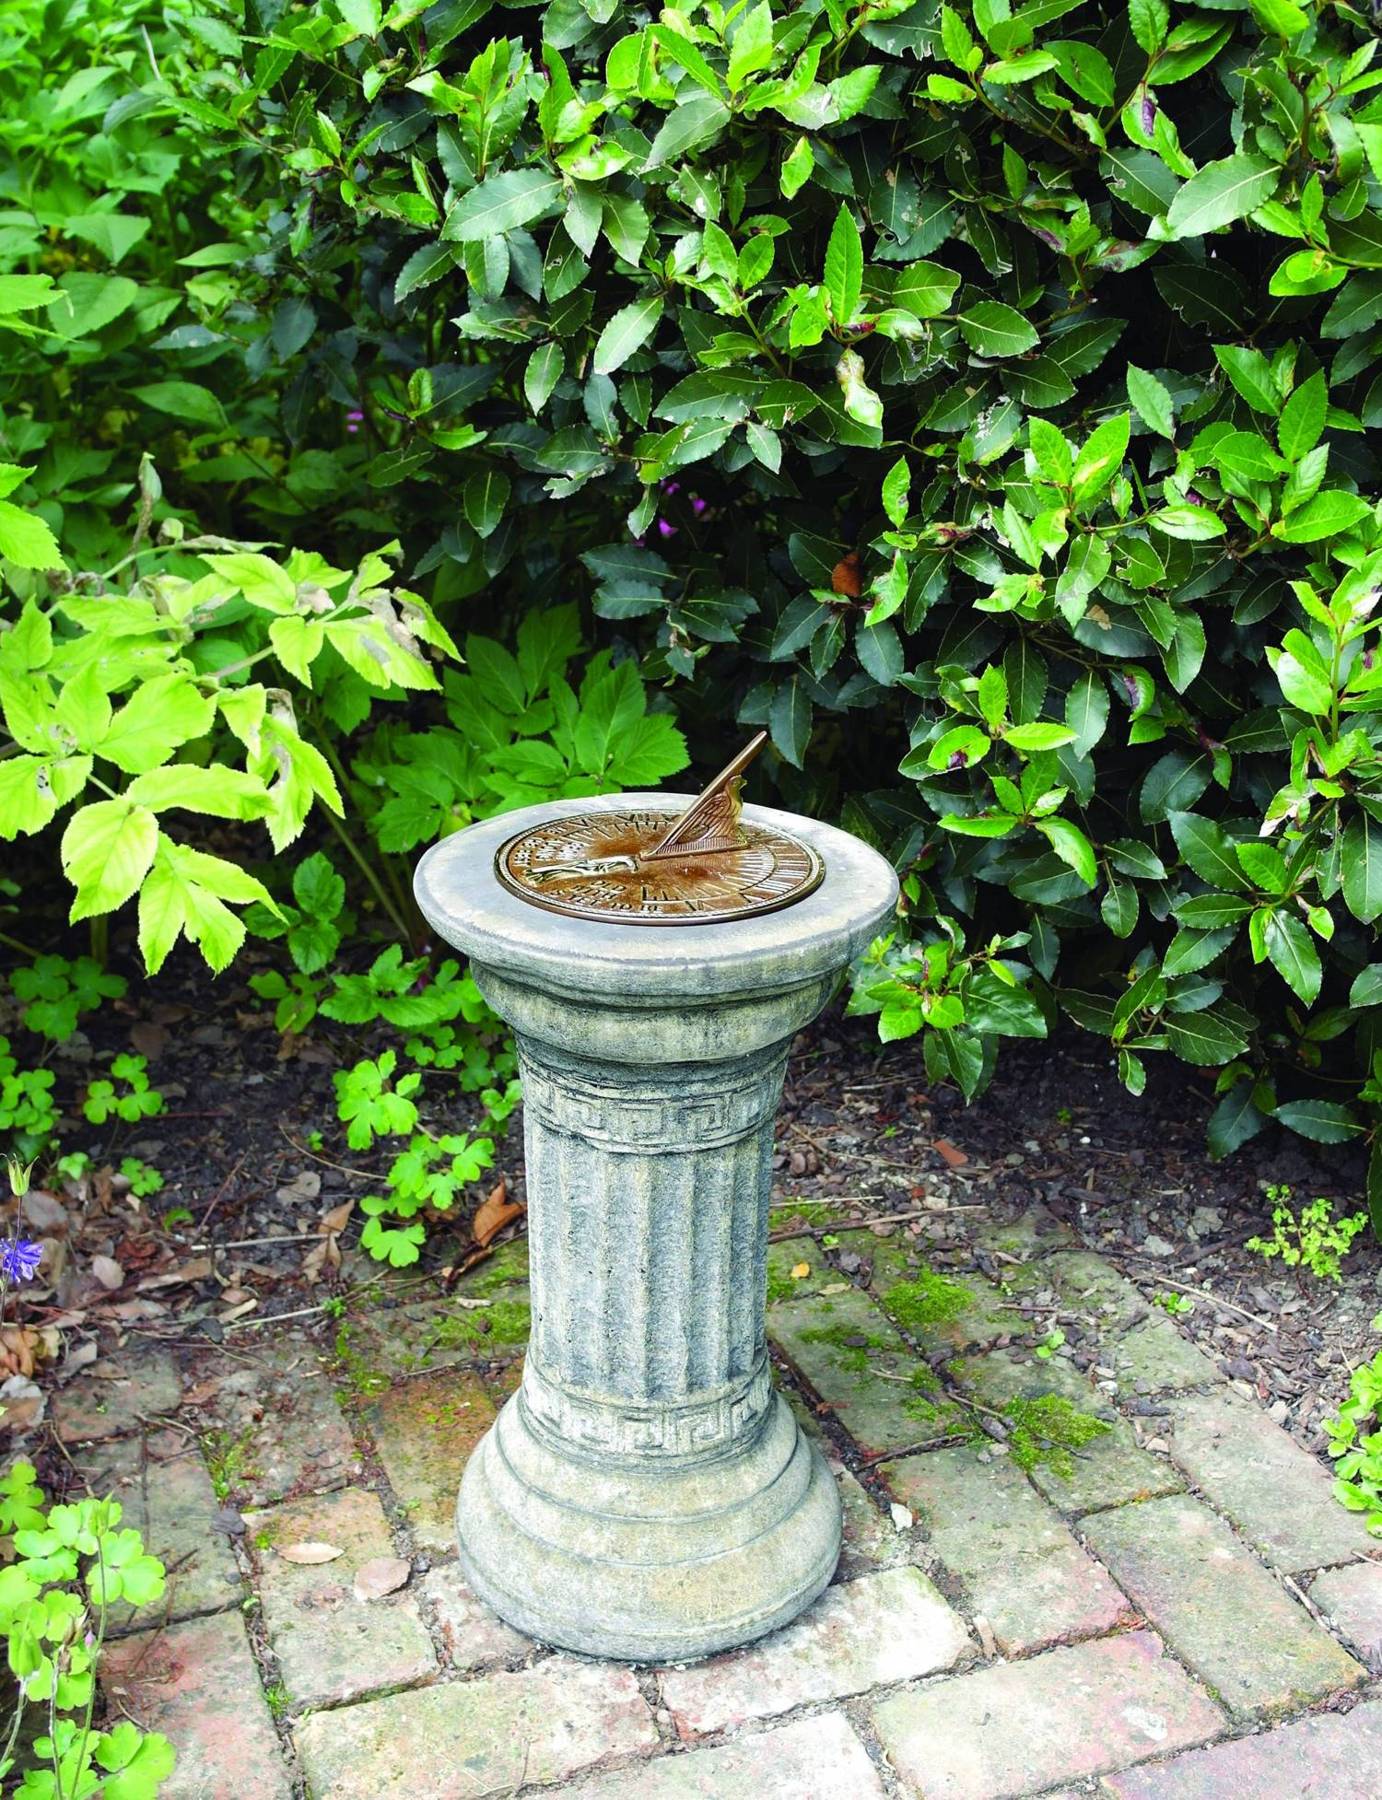 Aged Brass Sundial on Classical Stone Garden Pedestal